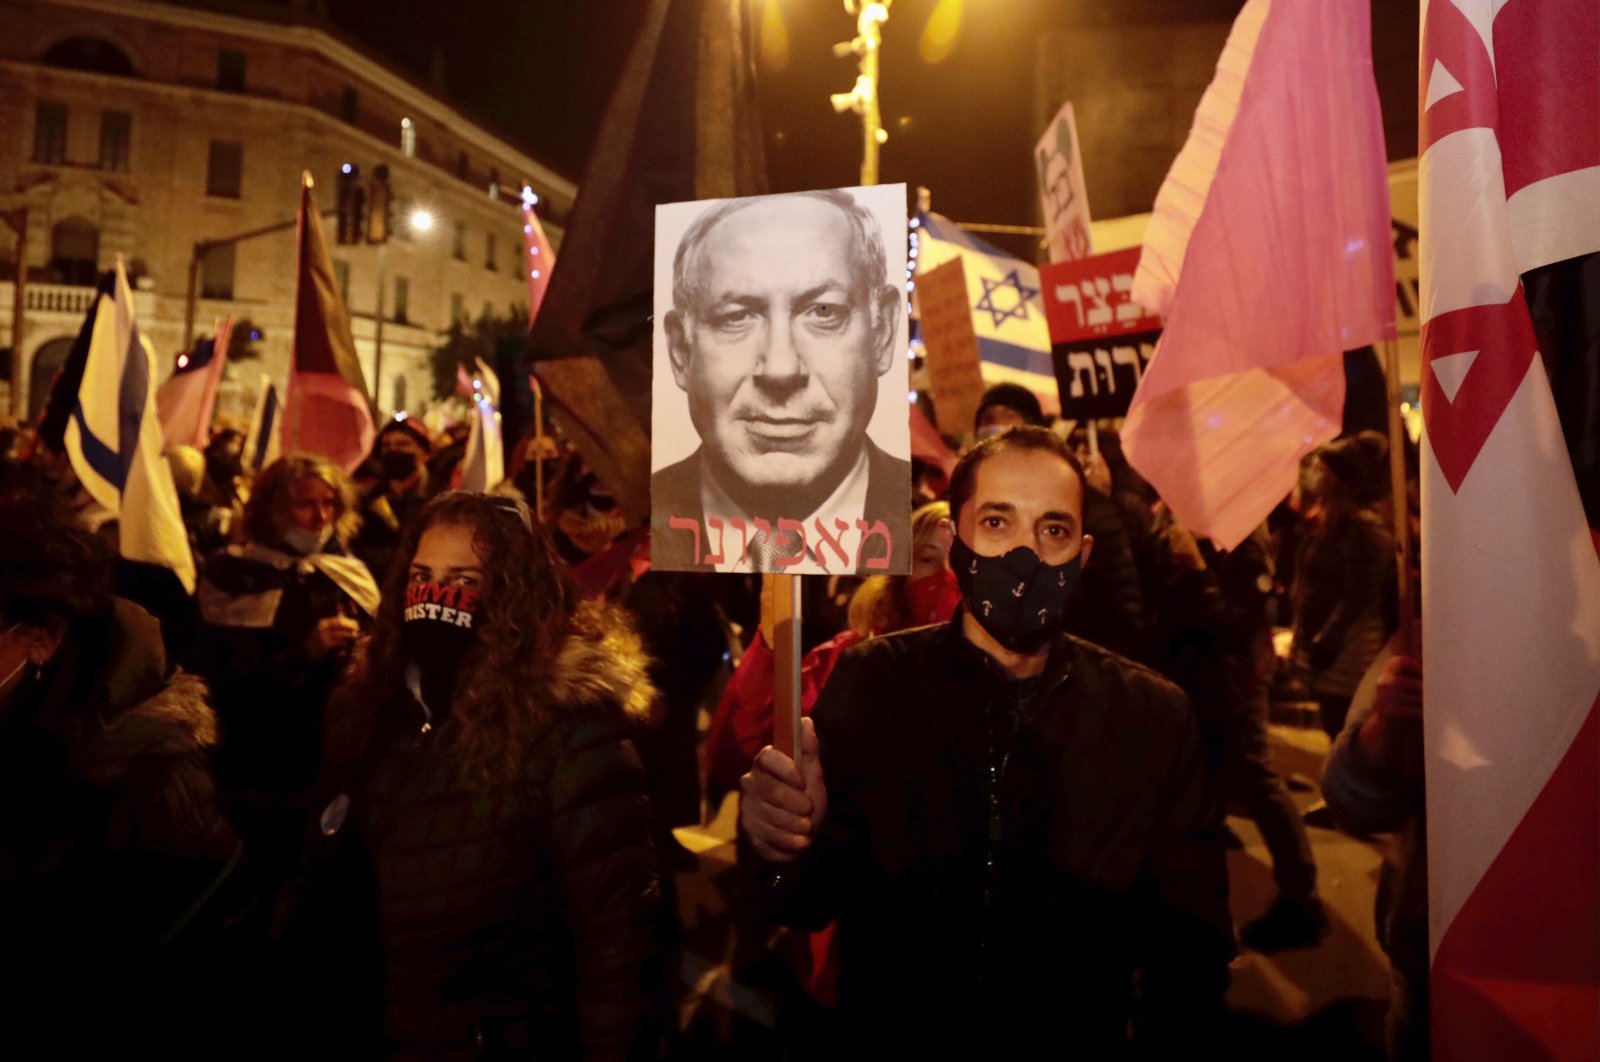 Israeli protesters hold signs during a demonstration against Israeli Prime Minister Benjamin Netanyahu in Jerusalem, Saturday, Dec. 26, 2020. (AP Photo)